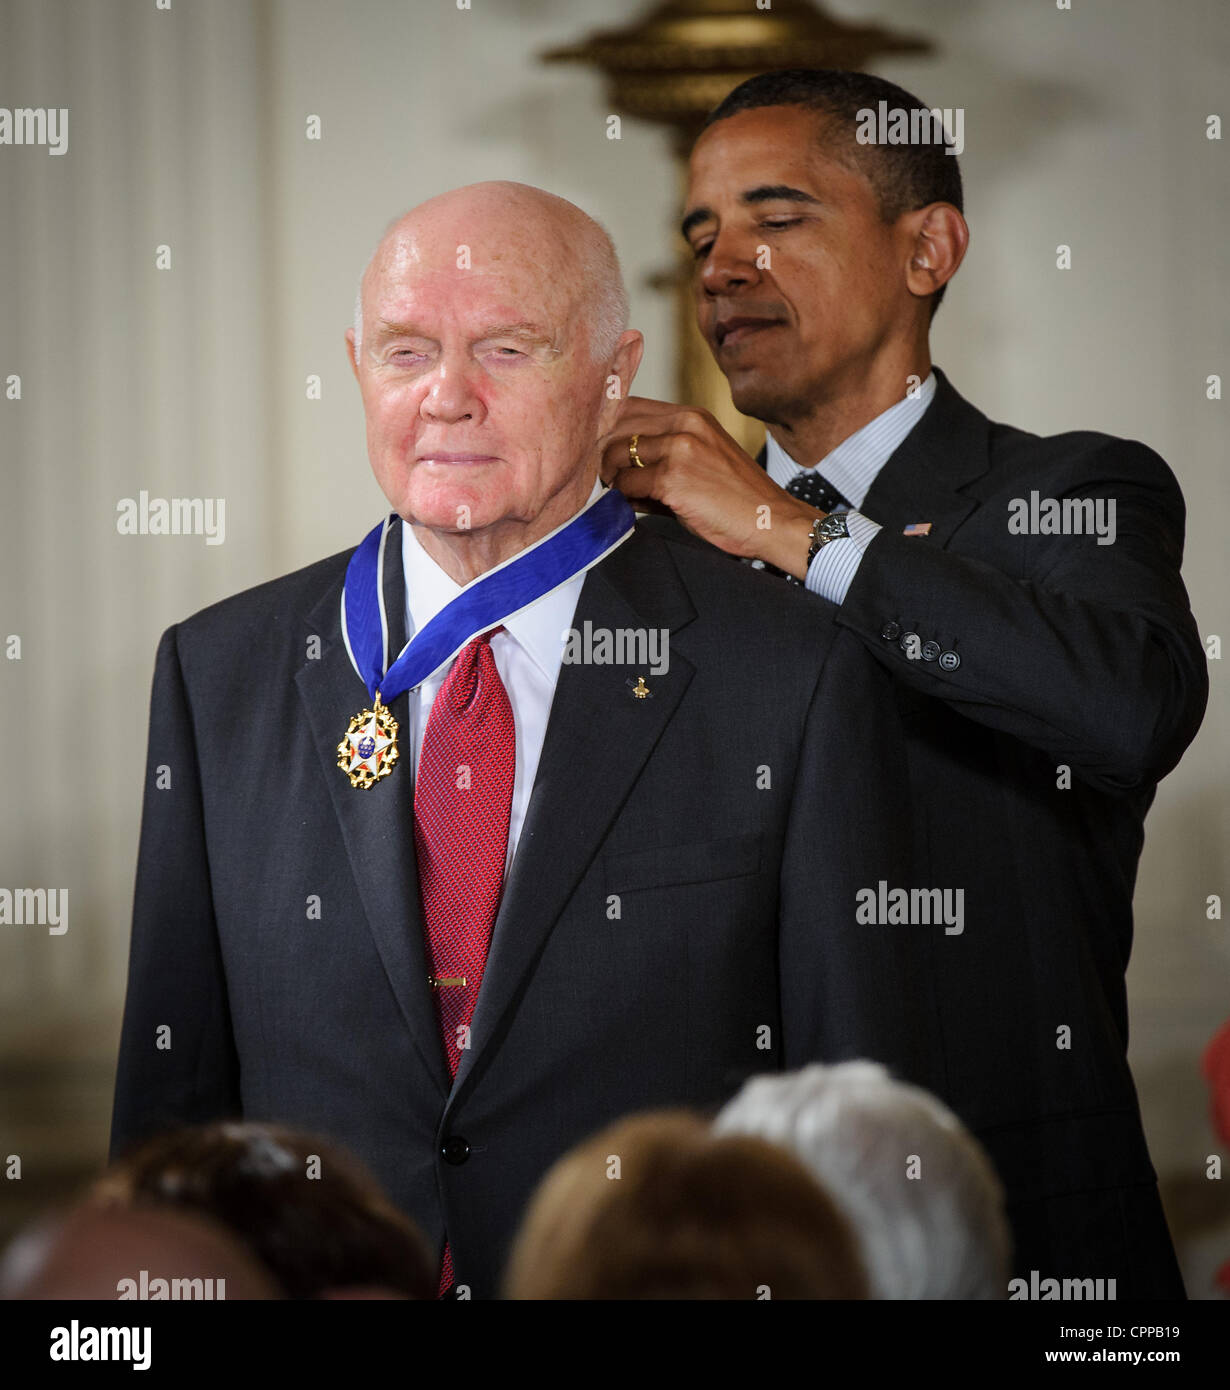 President Barack Obama awards the 2012 National Medal of Arts to